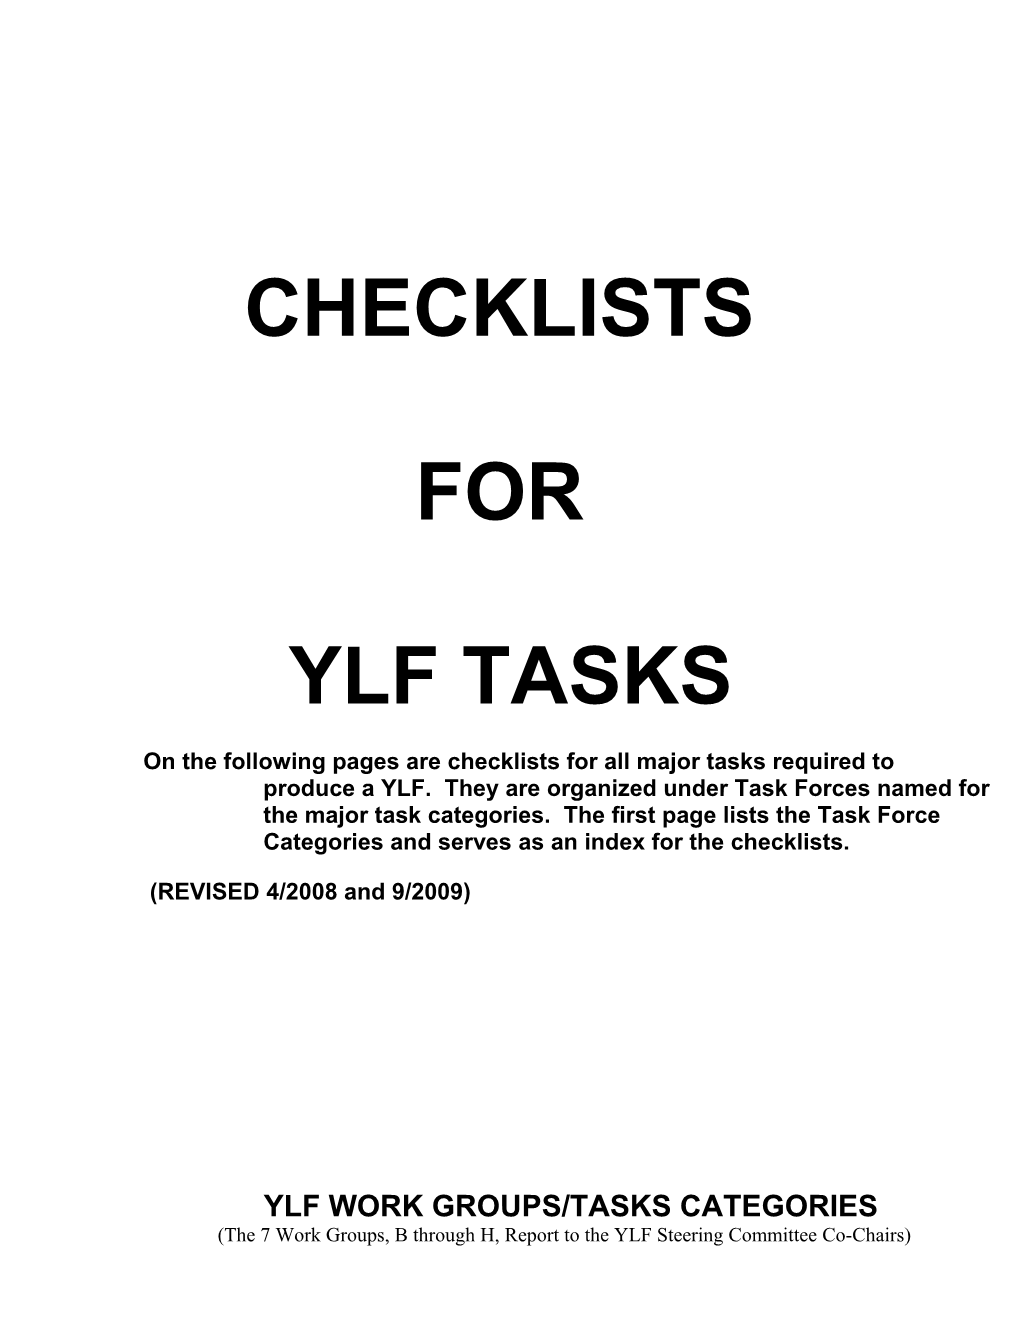 Ylf Work Groups/Tasks Categories